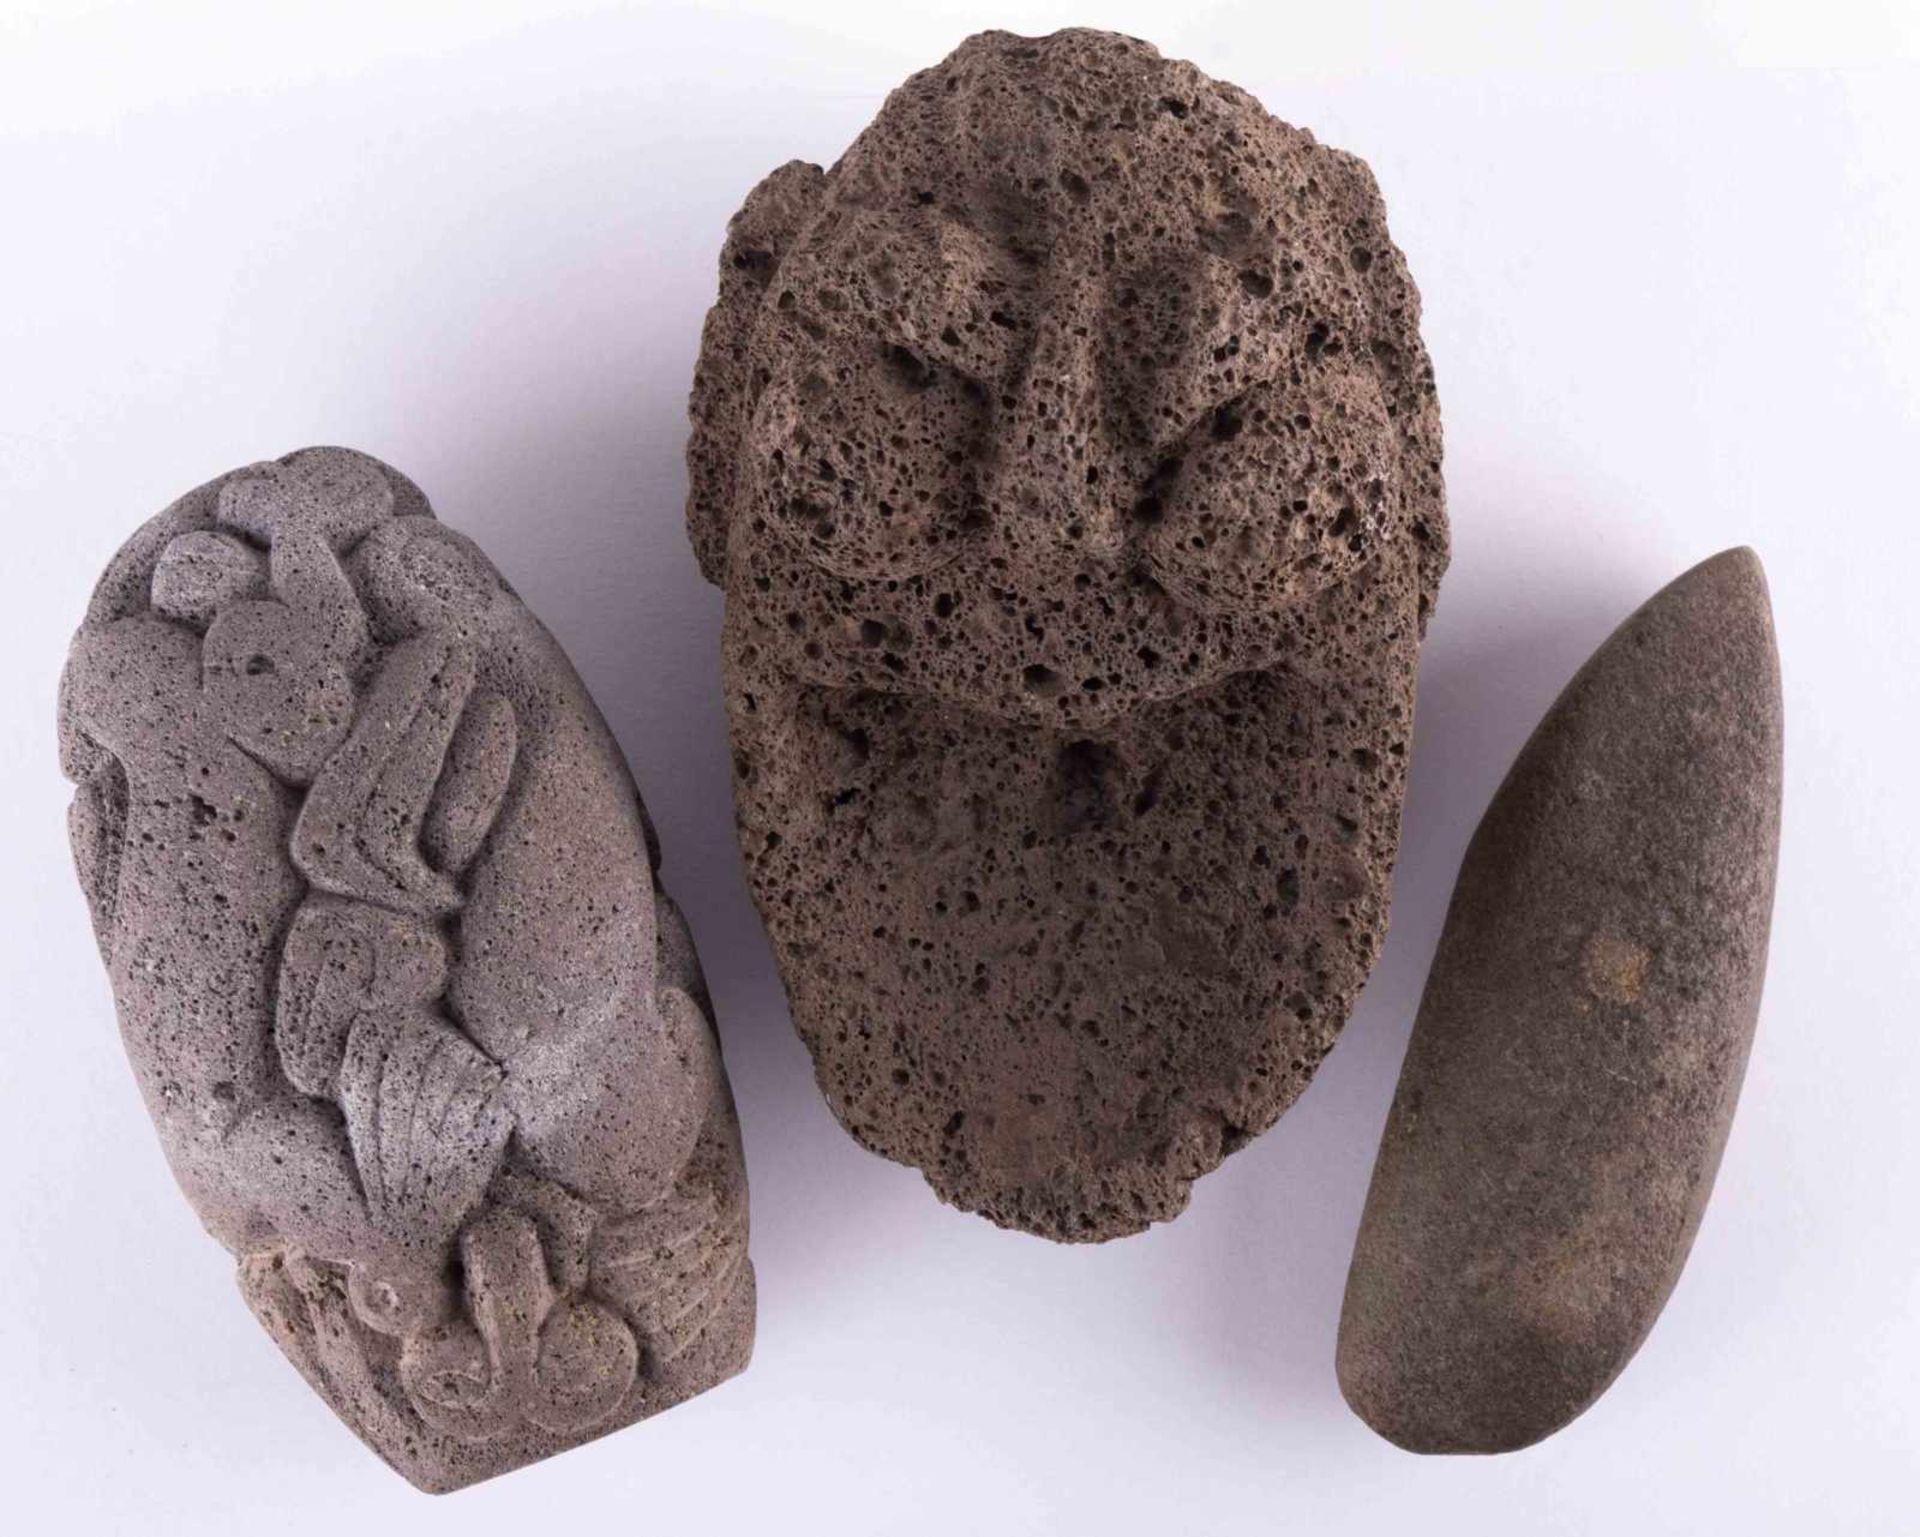 Konvolut Osterinseln-Gestein / Group of Easter Island rocks 1 Maske 18 cm x 11 cm x 9 cm,